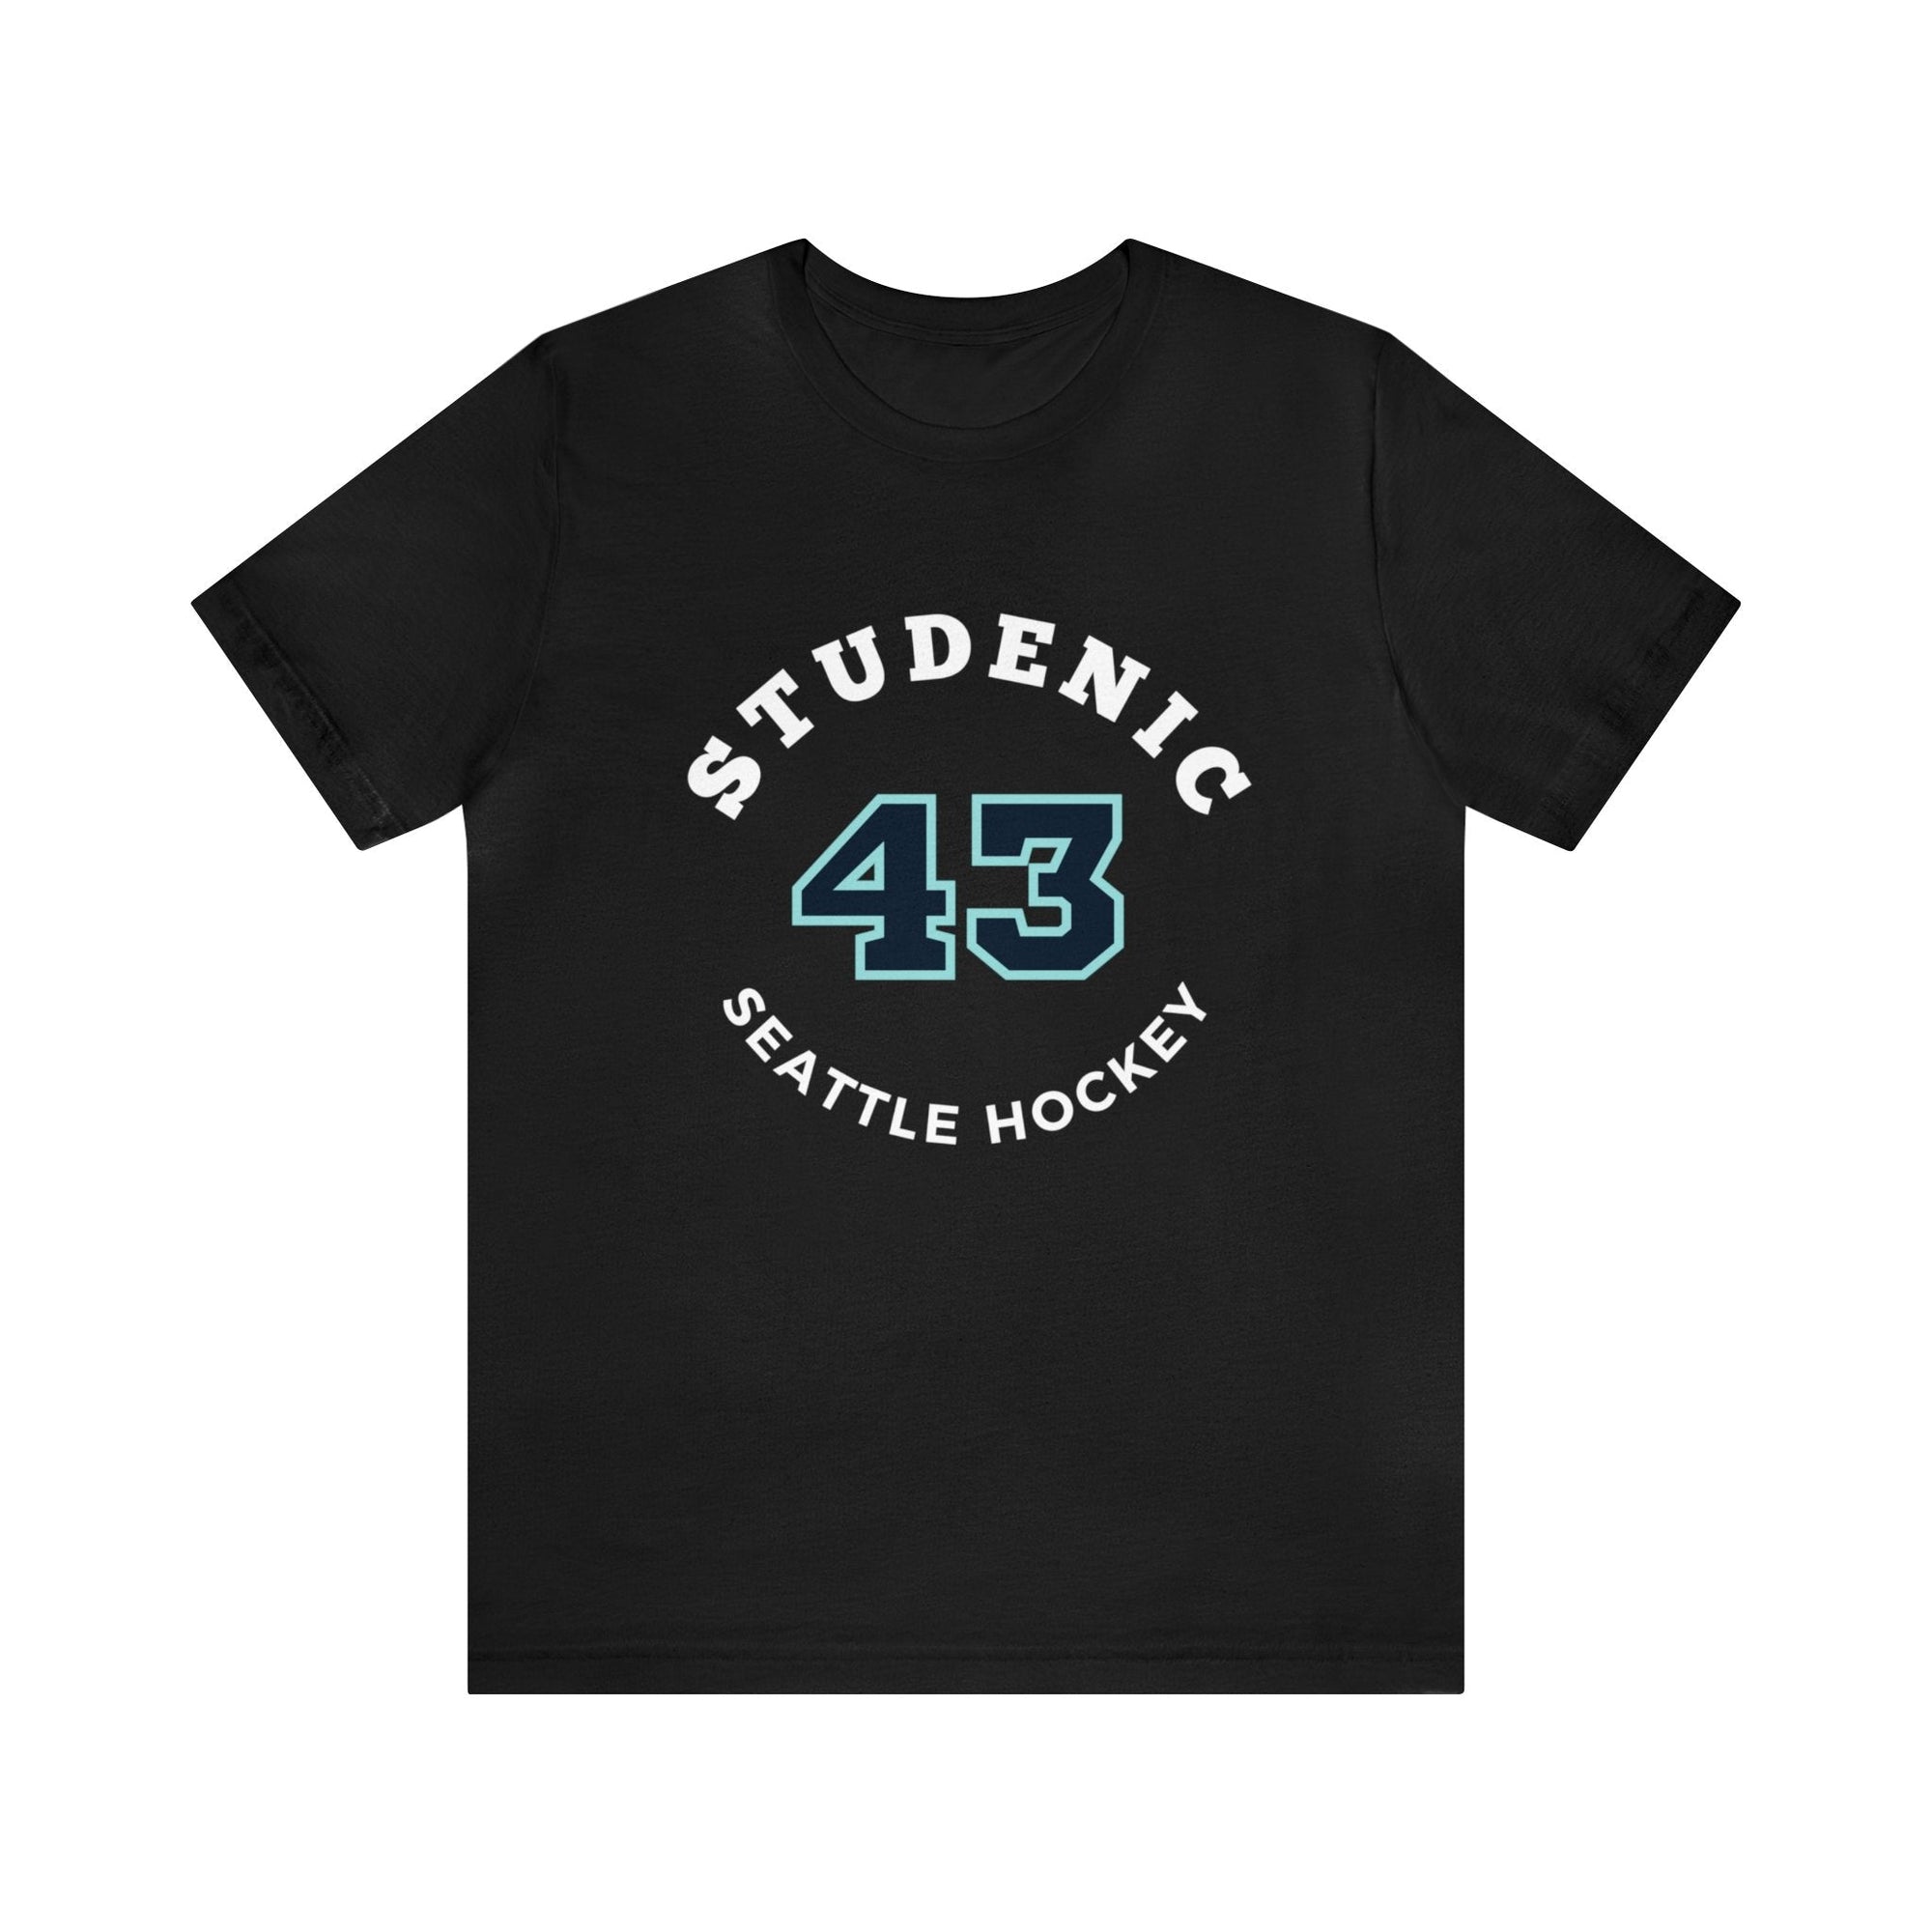 T-Shirt Studenic 43 Seattle Hockey Number Arch Design Unisex T-Shirt